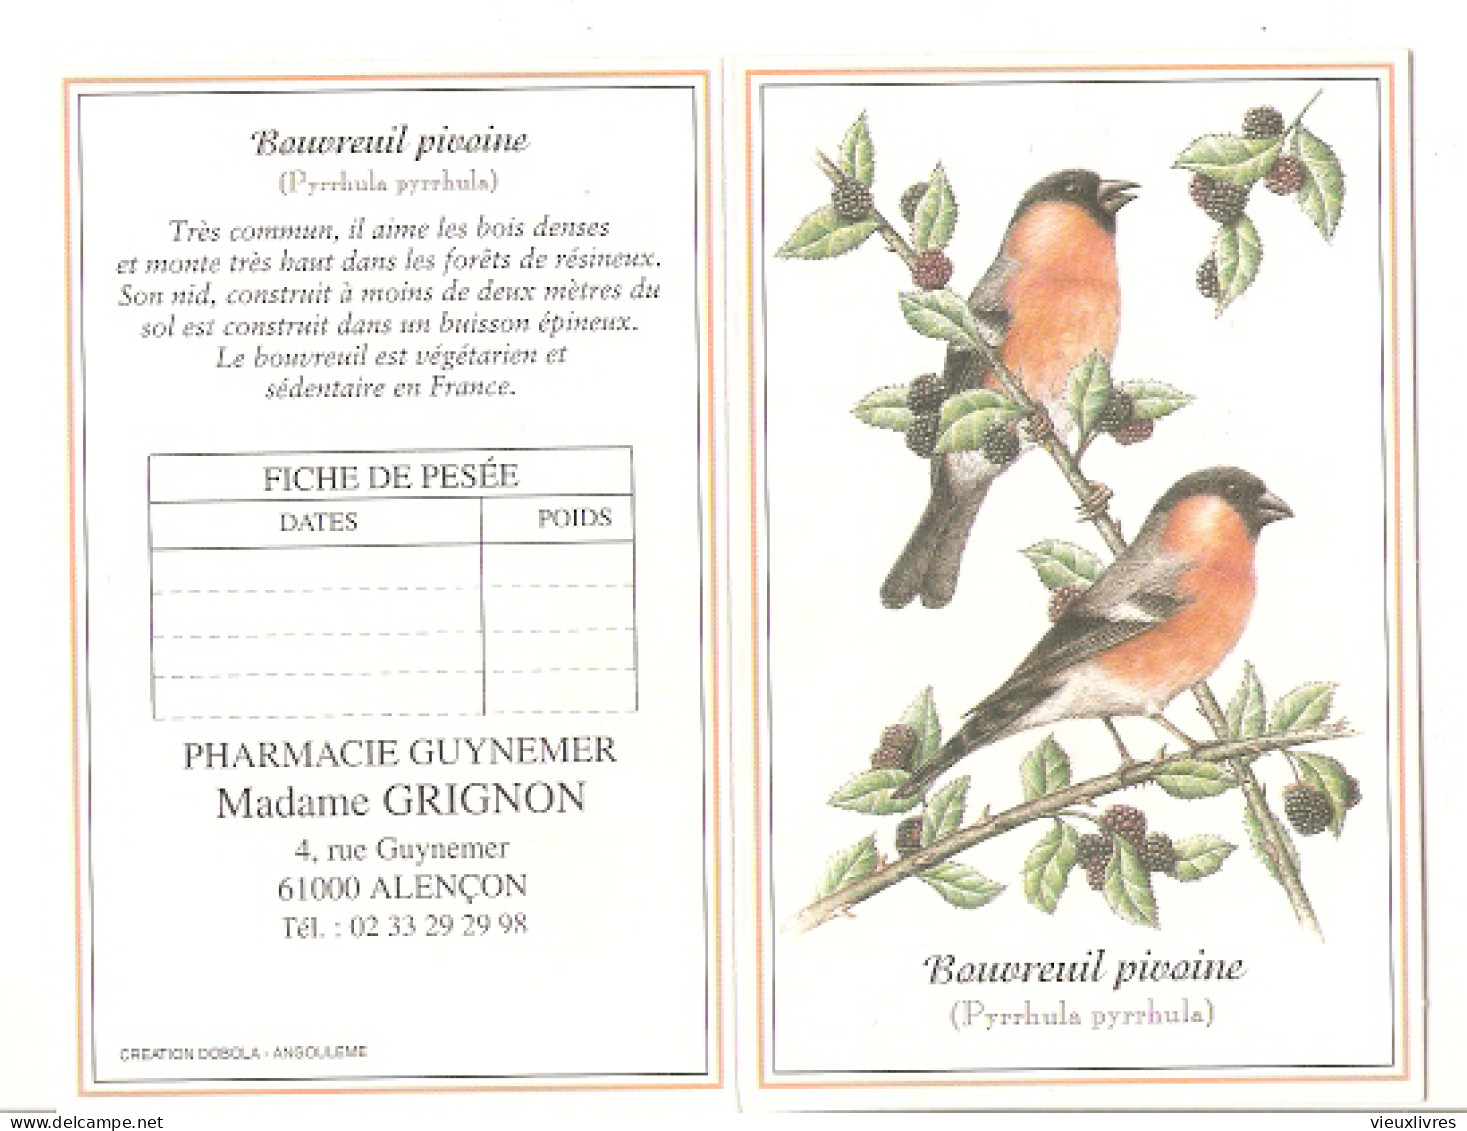 Calendrier De Poche Bouvreuil Pivoine Orne Alençon Pharmacie 2000 - Tamaño Pequeño : 1991-00